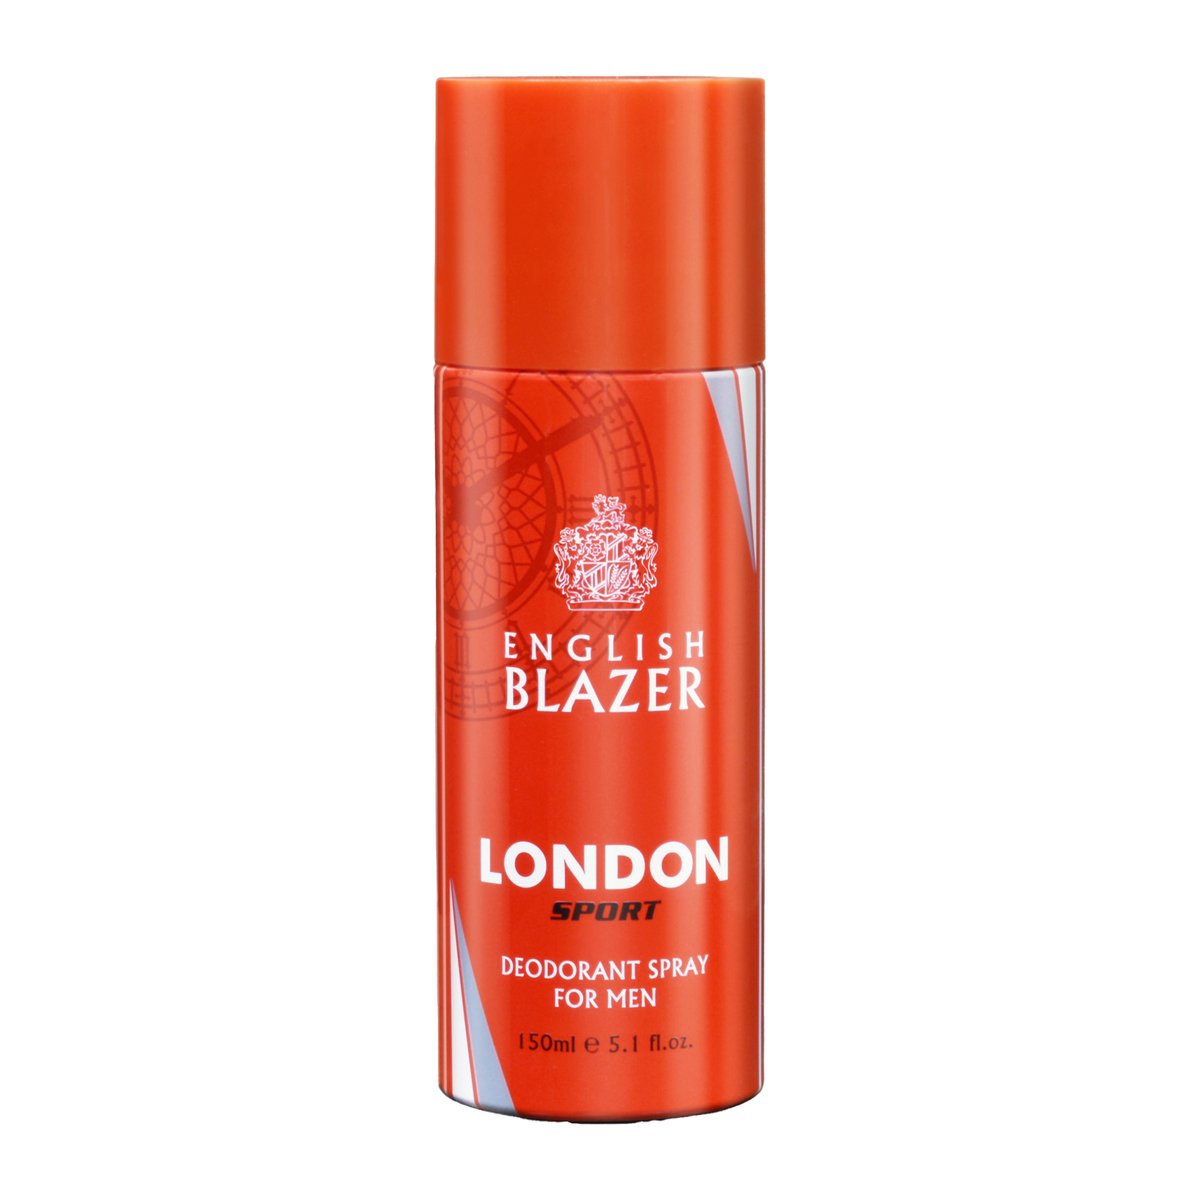 English Blazer London Sport Deodorant Spray For Men 150 ml